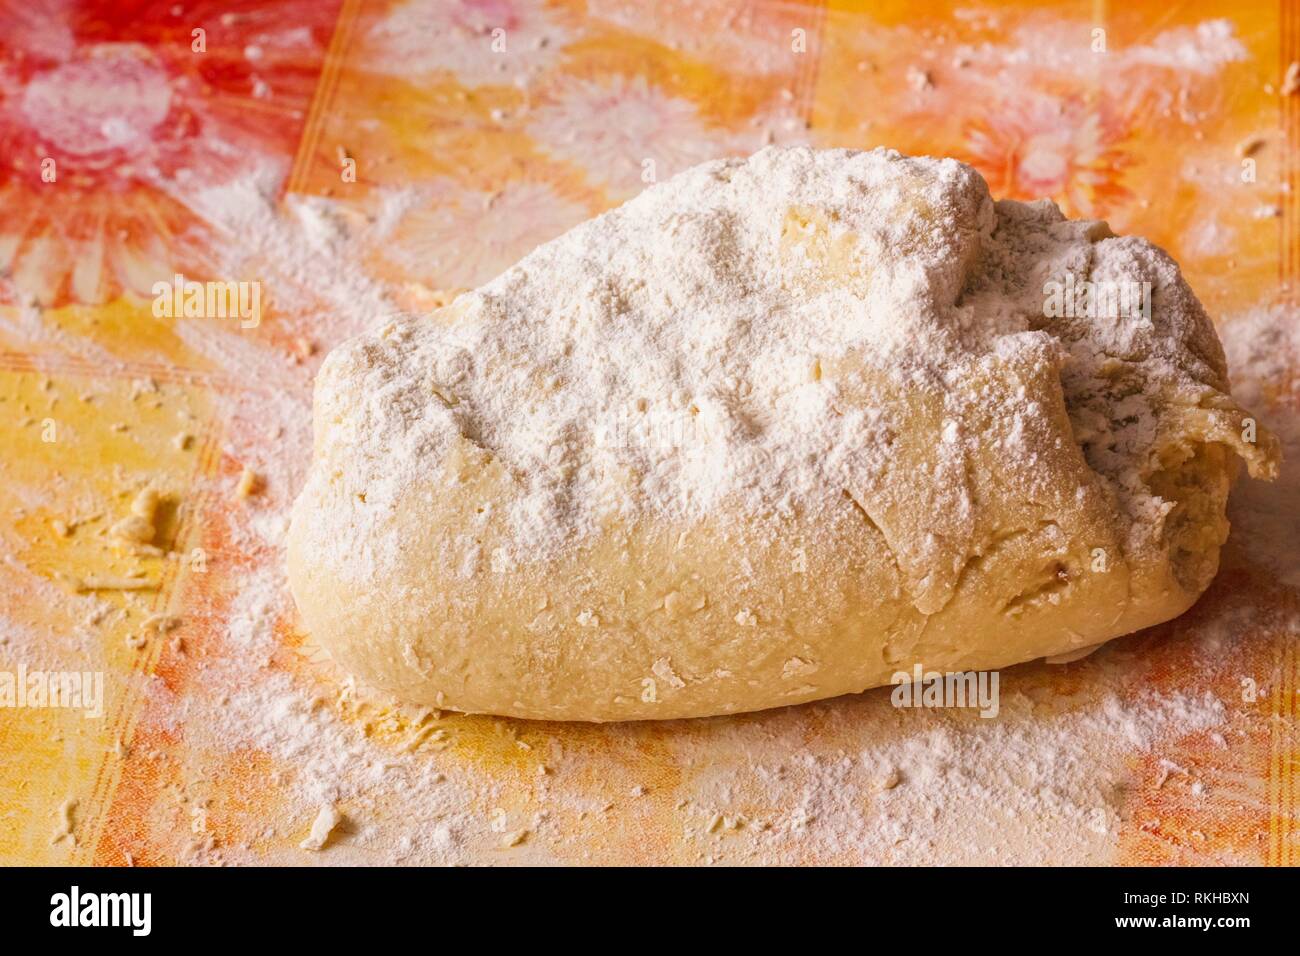 https://c8.alamy.com/comp/RKHBXN/fresh-homemade-dough-for-bread-RKHBXN.jpg